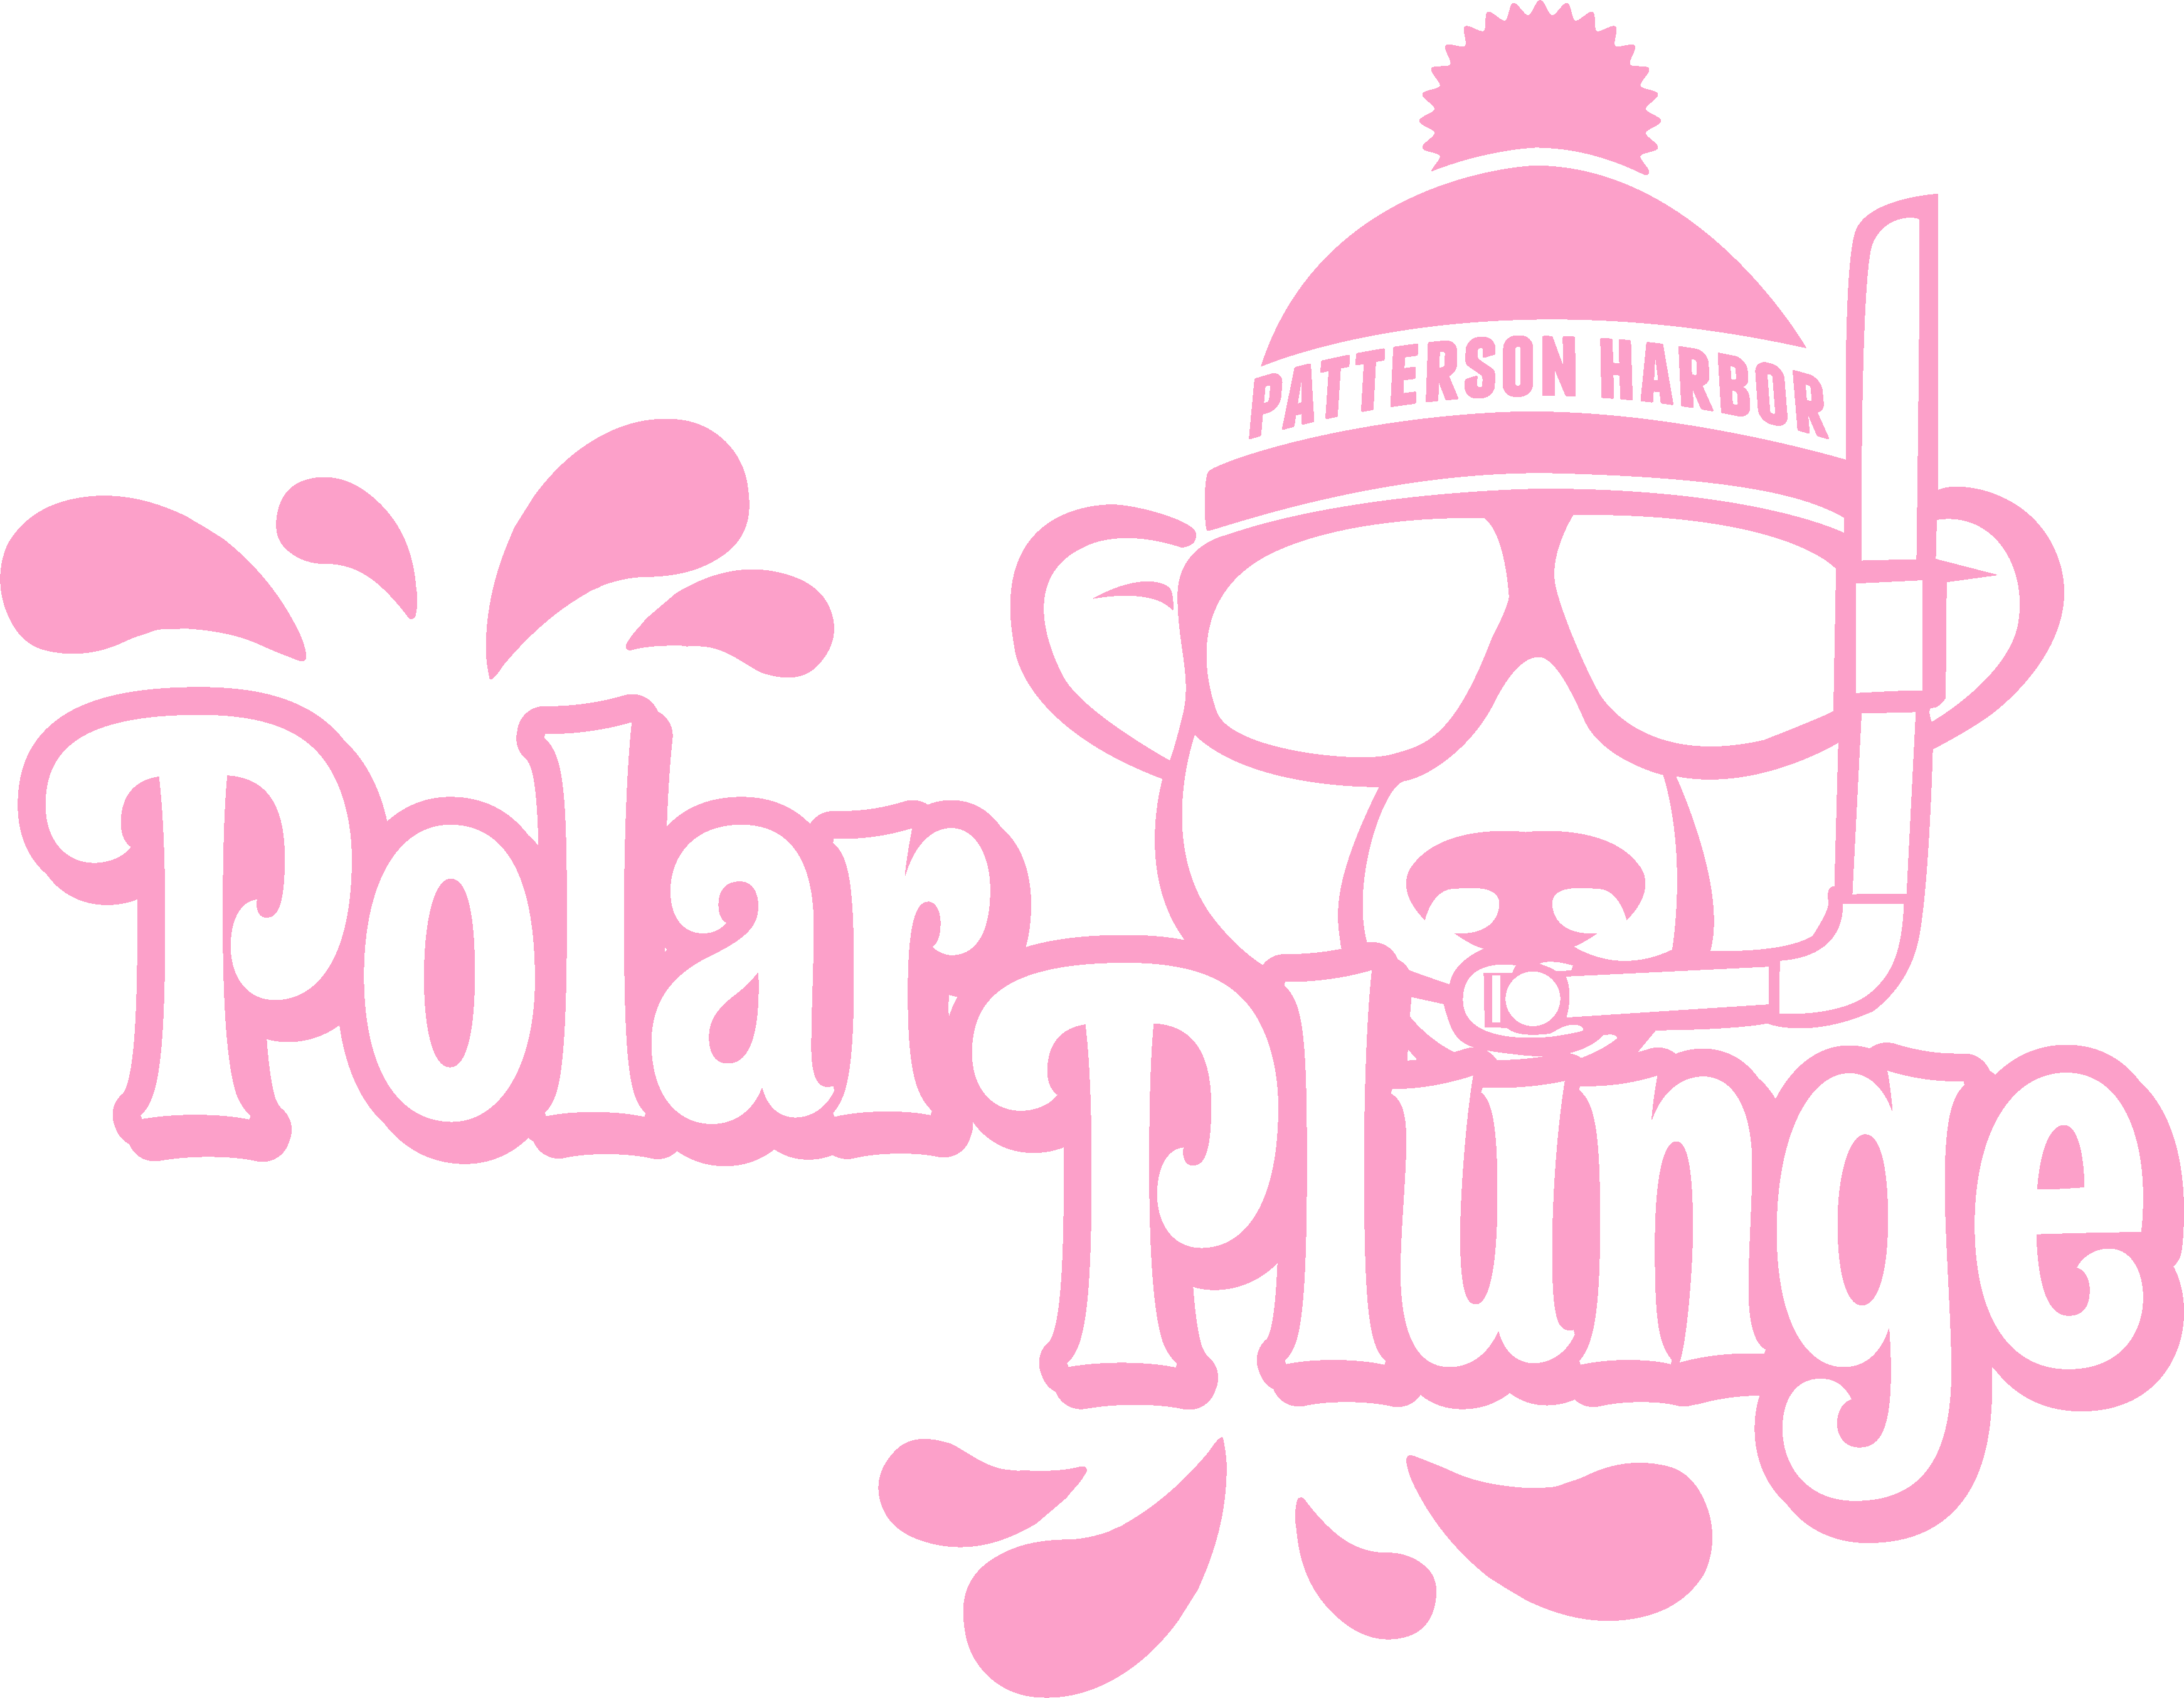 patterson harbor polar plunge logo